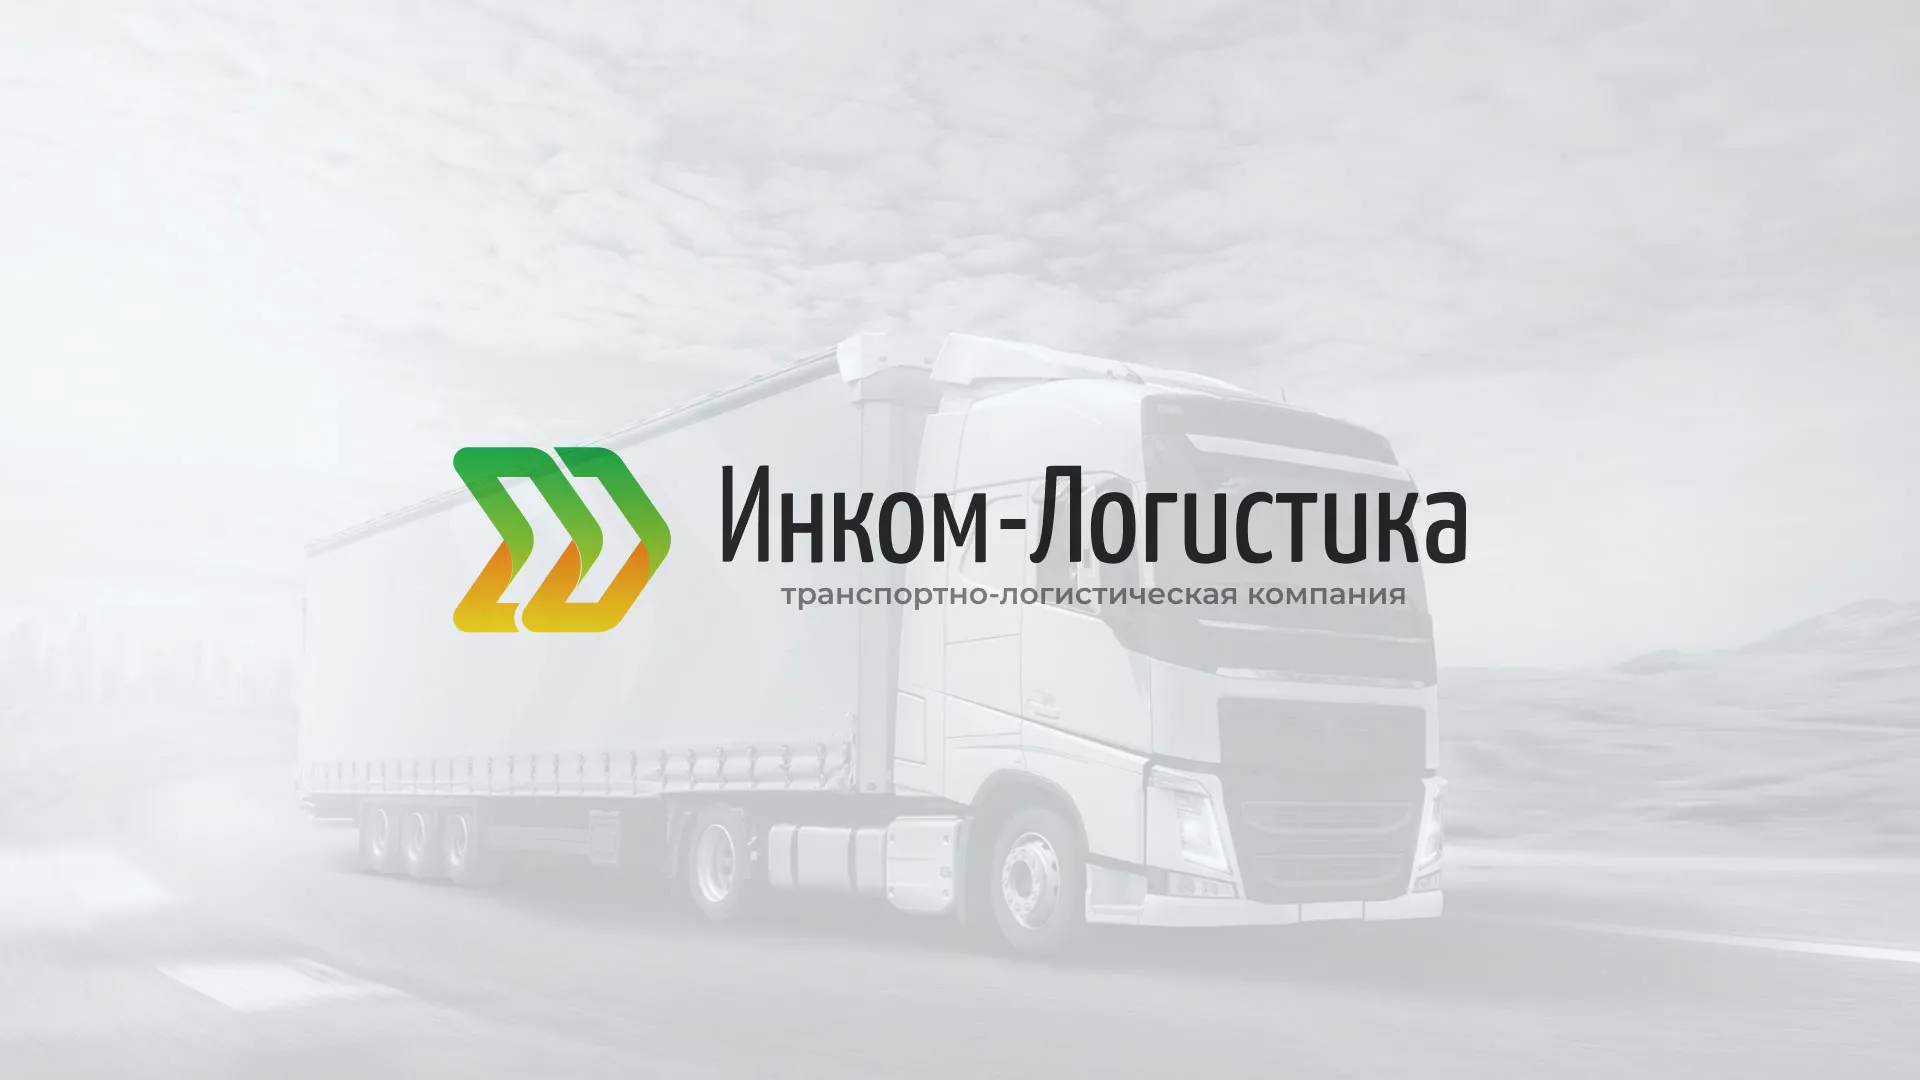 Разработка логотипа и сайта компании «Инком-Логистика» в Ногинске